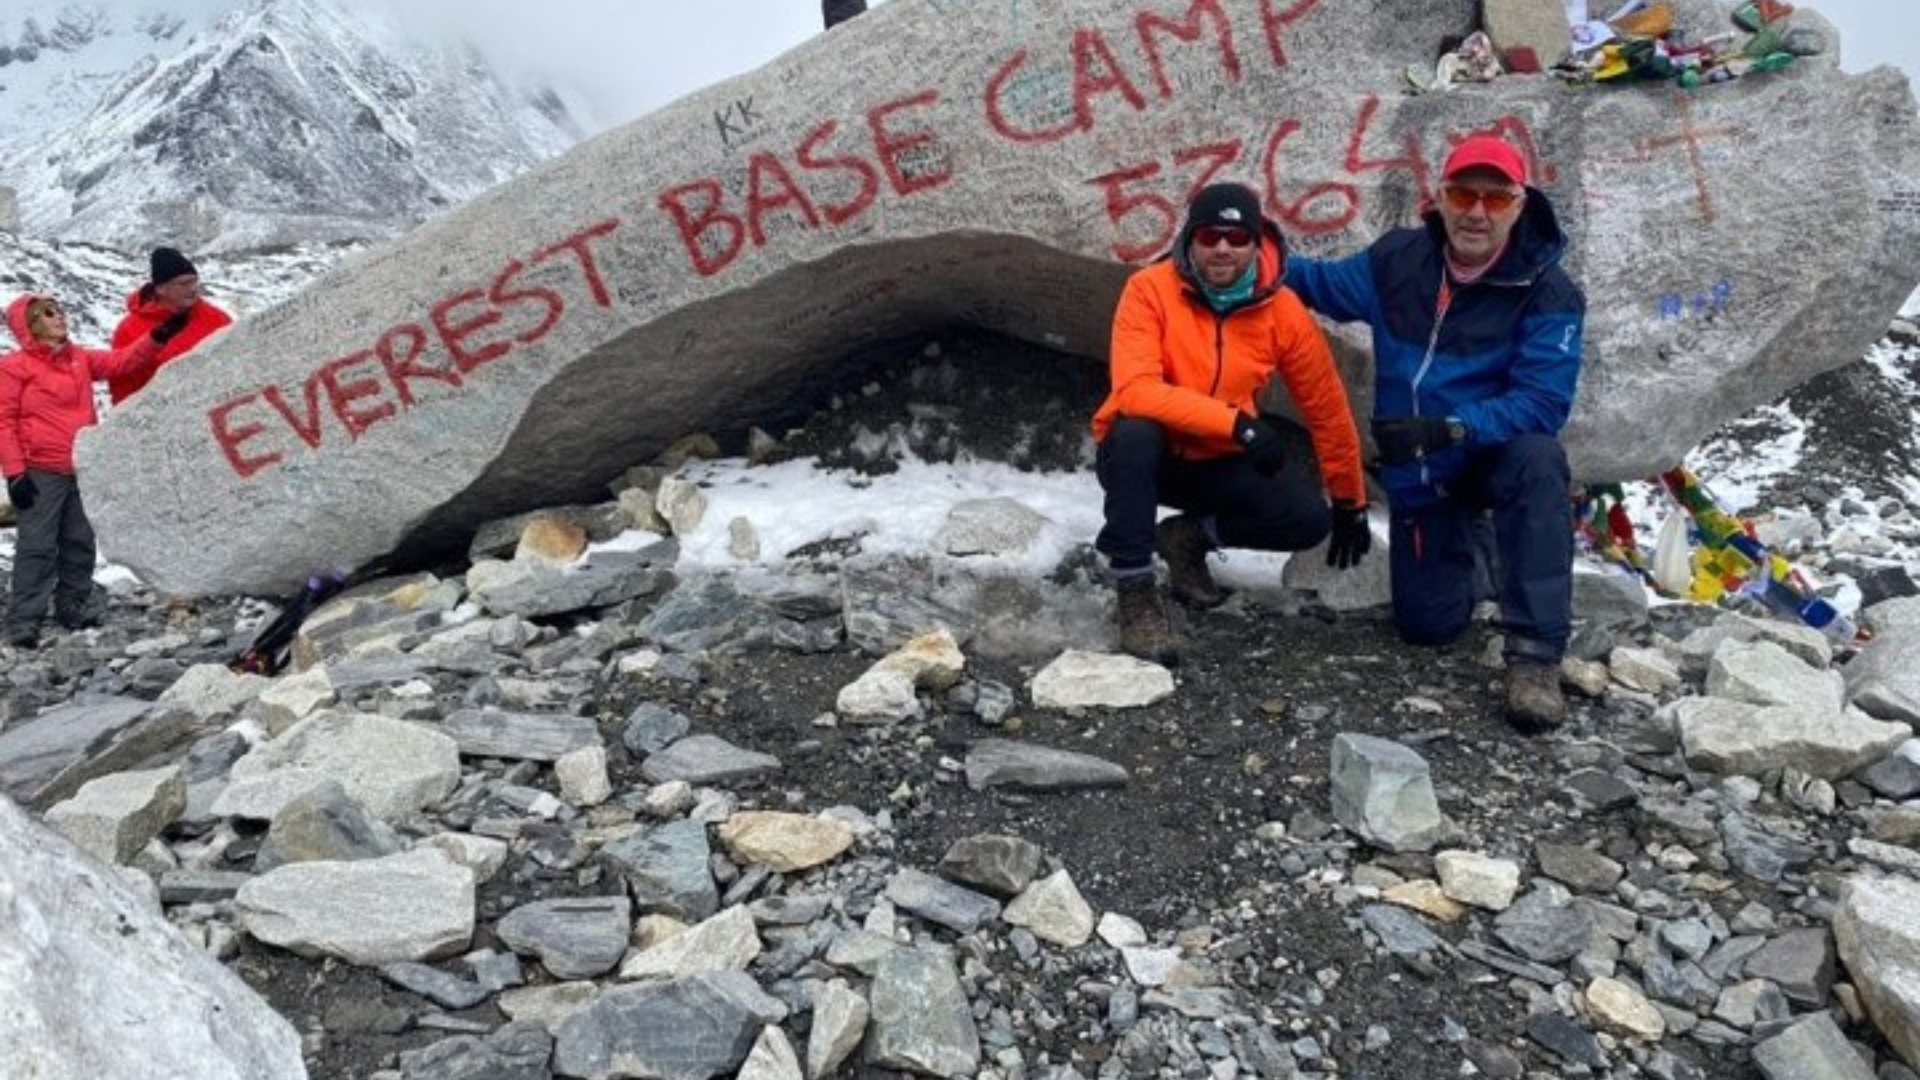 Everest Base Camp Climb raises €3,000